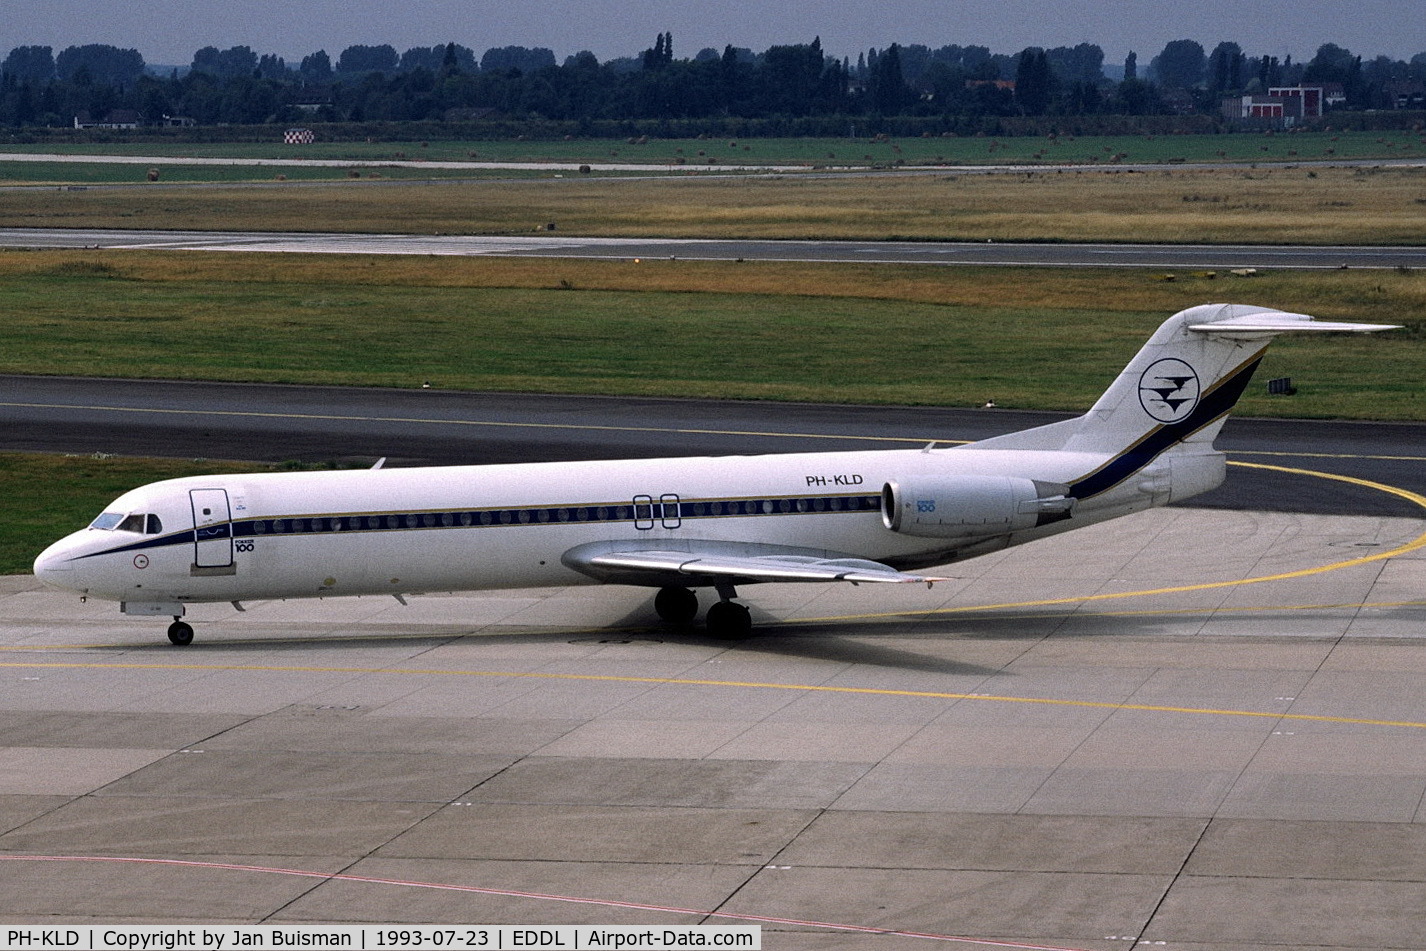 PH-KLD, 1989 Fokker 100 (F-28-0100) C/N 11269, Air Littoral, no titles